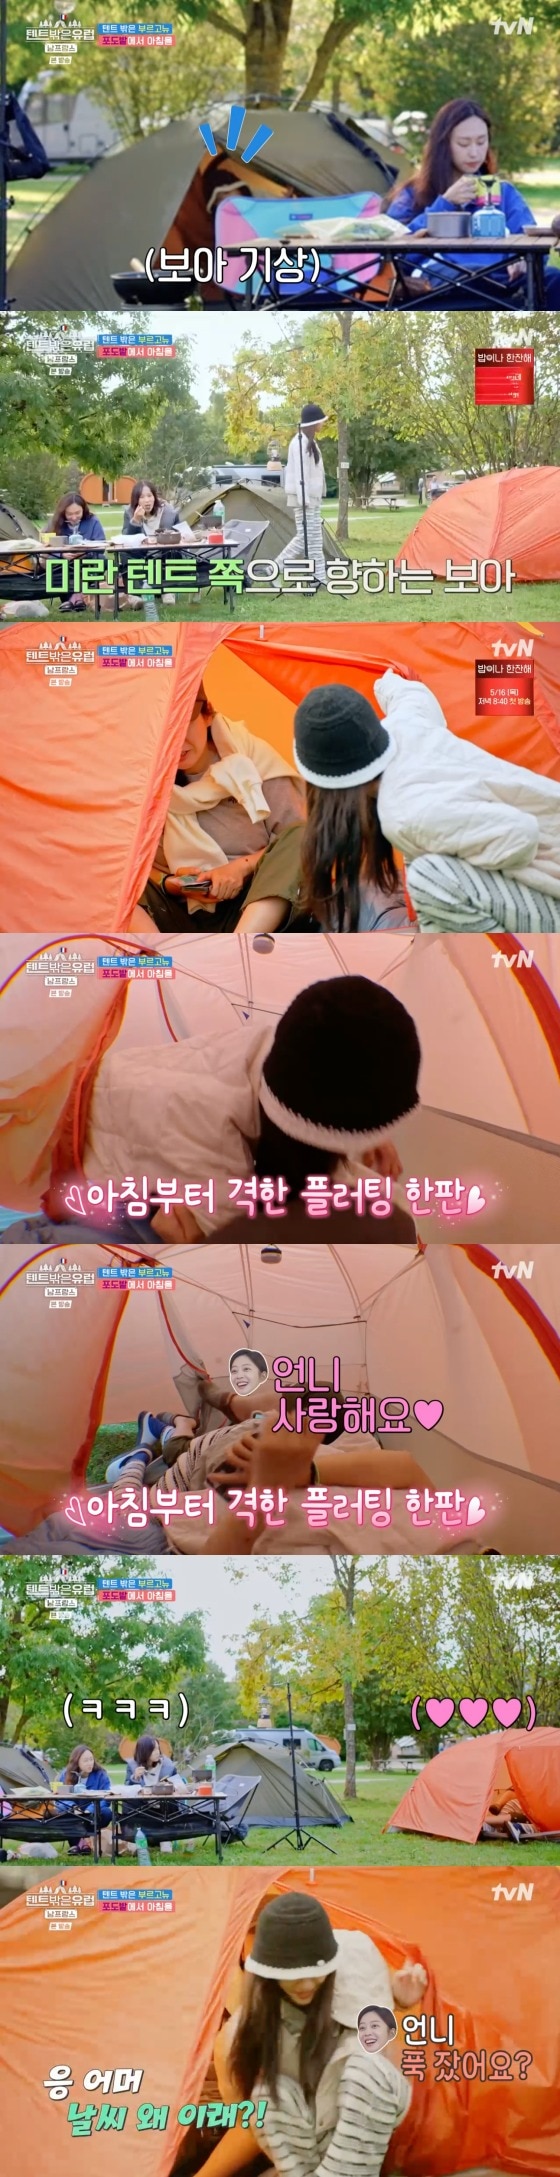   tvN '텐트 밖은 유럽 - 남프랑스 편' 방송화면 갈무리   